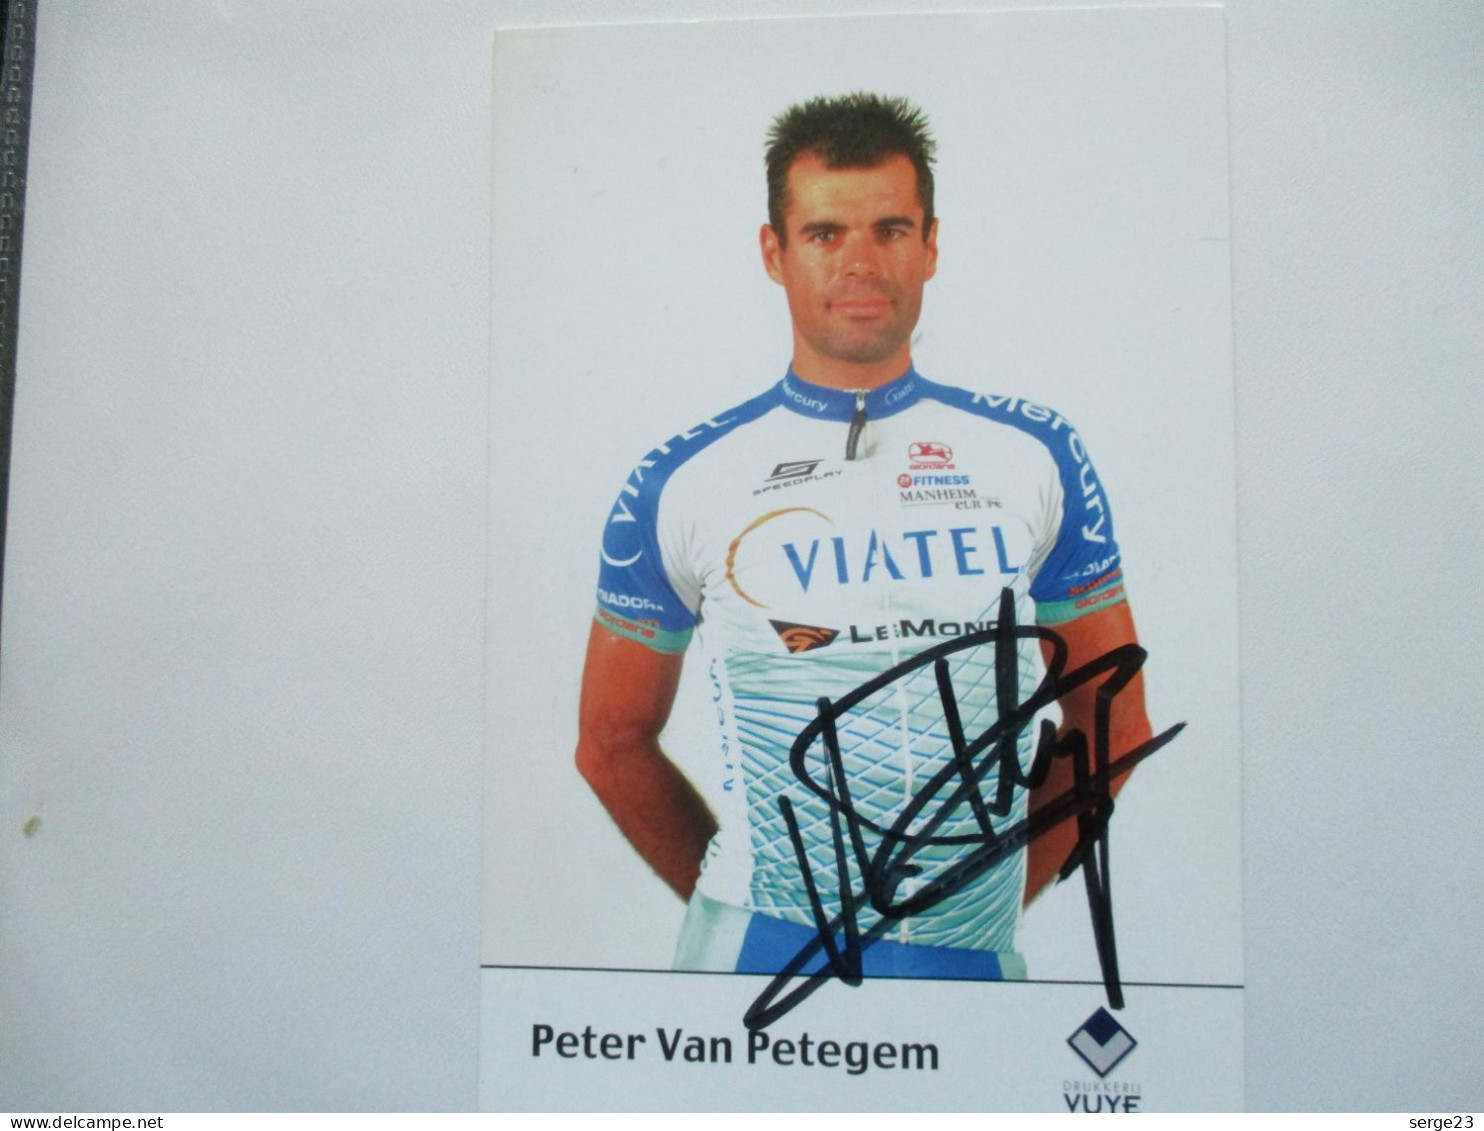 Cyclisme Photo Signee Peter Van Petegem Signee - Cyclisme